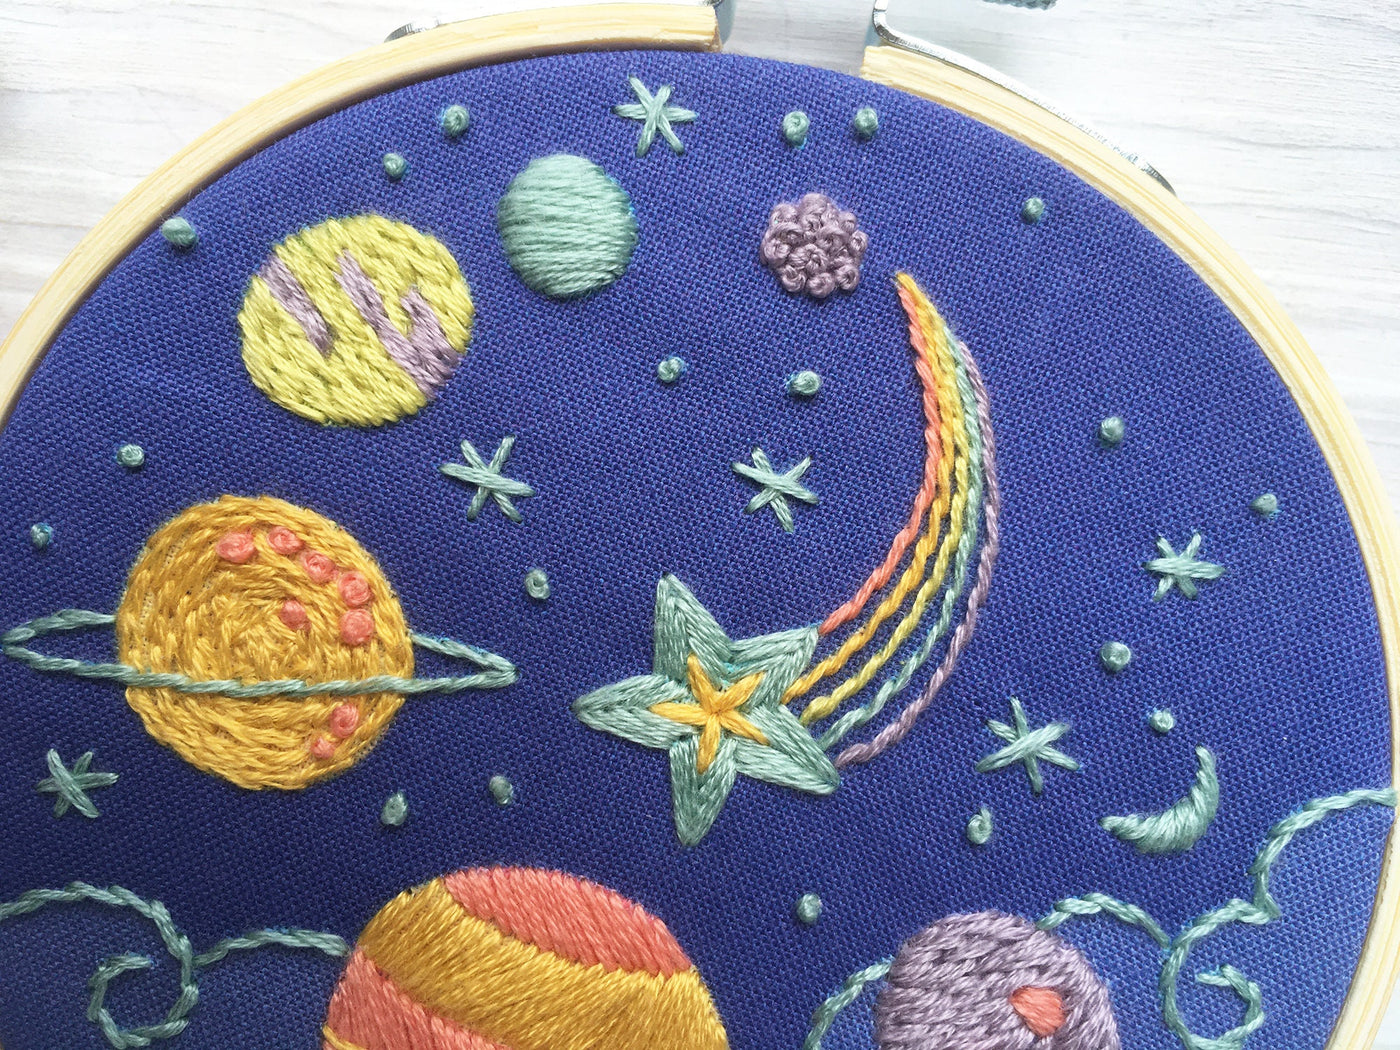 Purple Space Stars (small print) Fabric